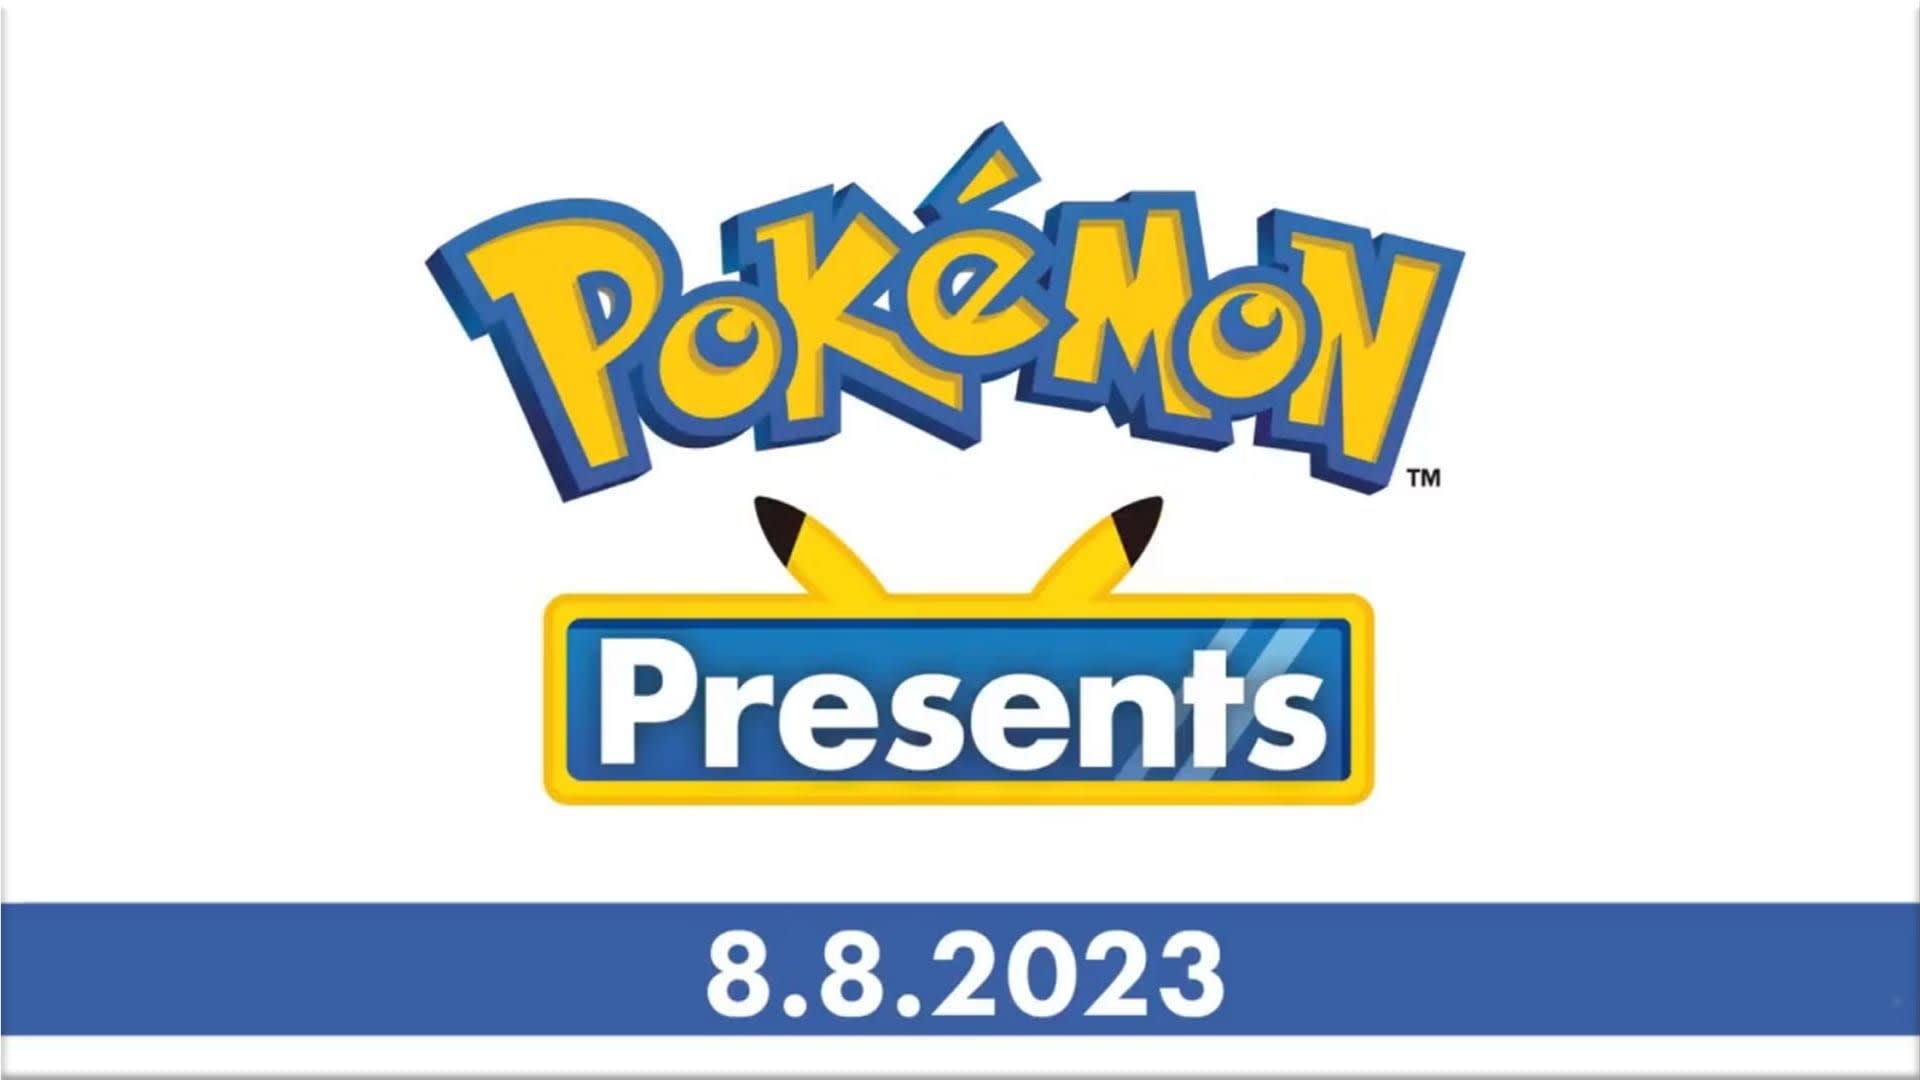 Pokémon reveals new entertainment experiences and updates across the